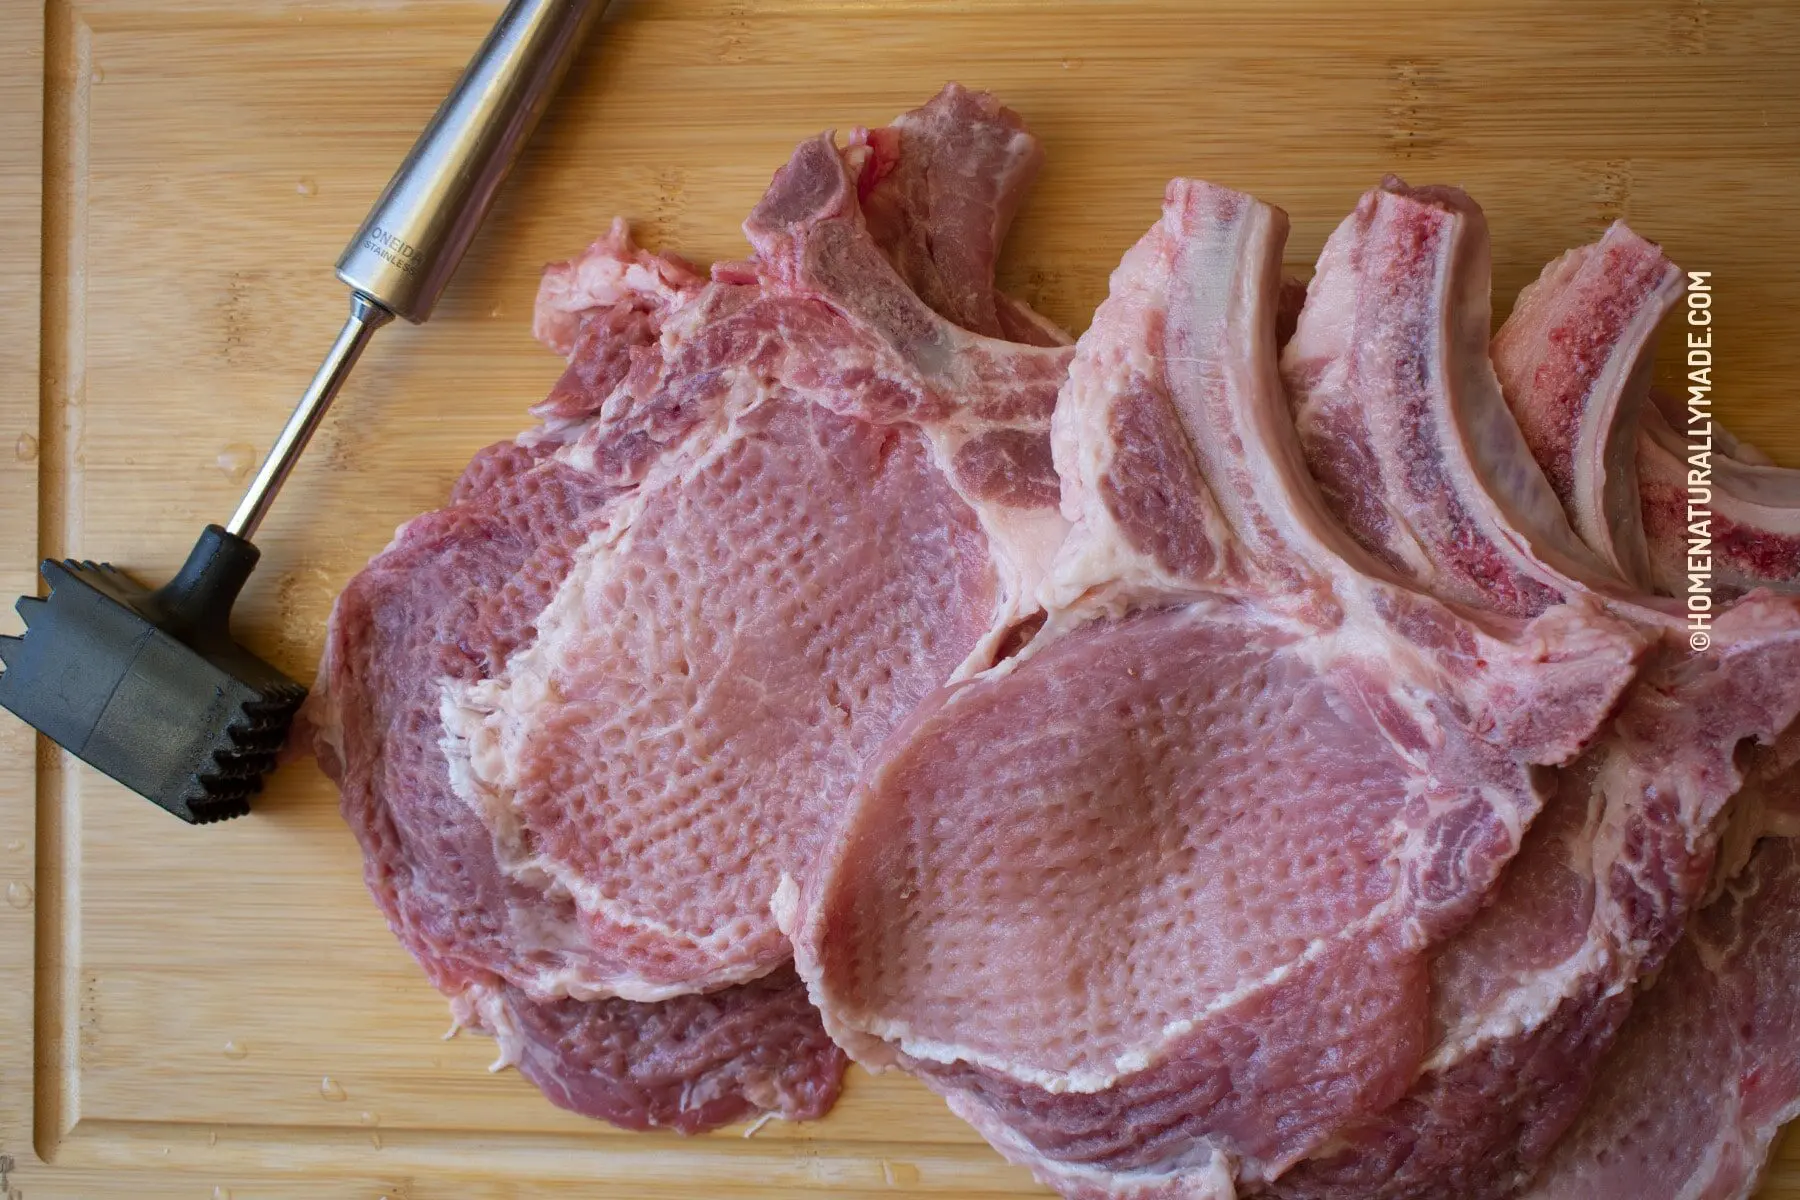 tenderized pork chops